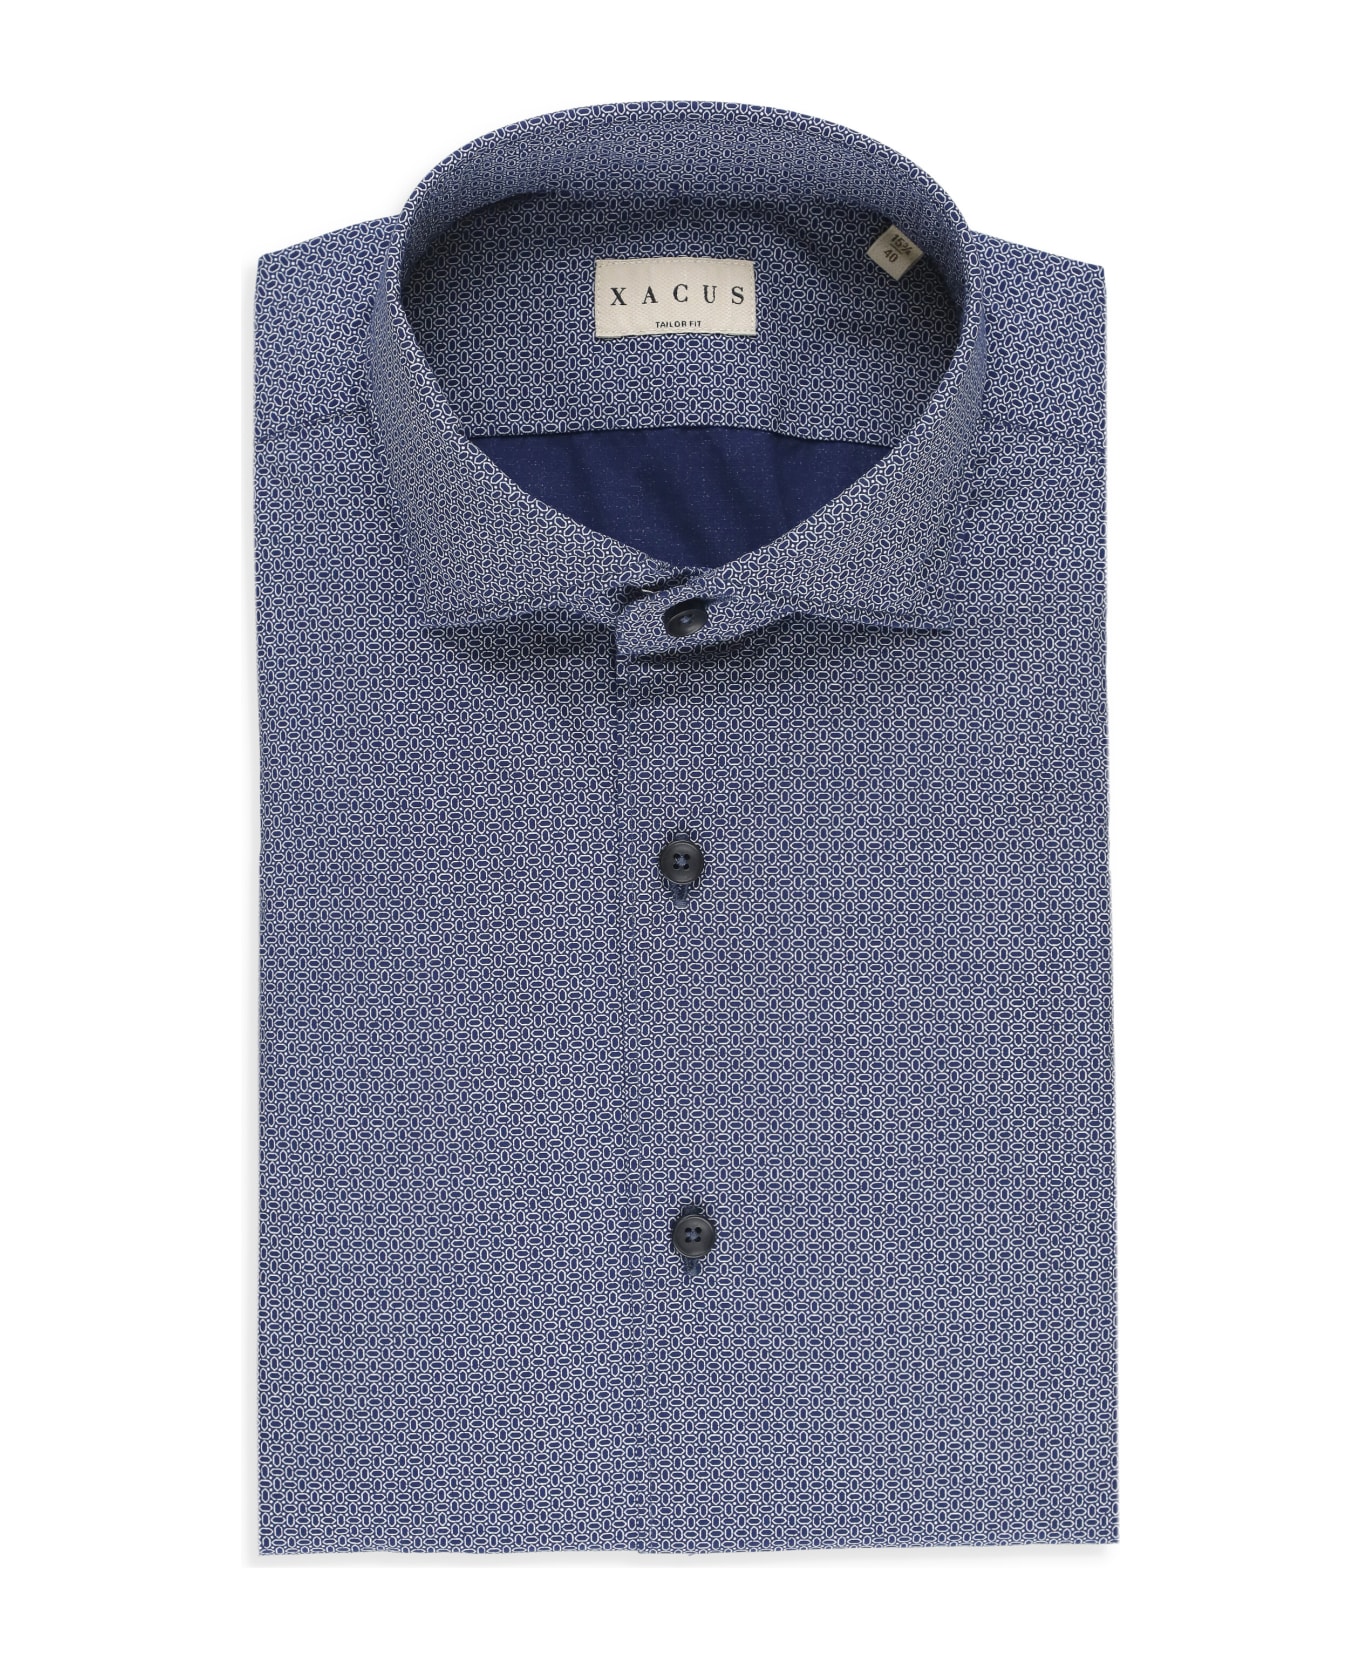 Xacus Tailor Shirt - Blue シャツ